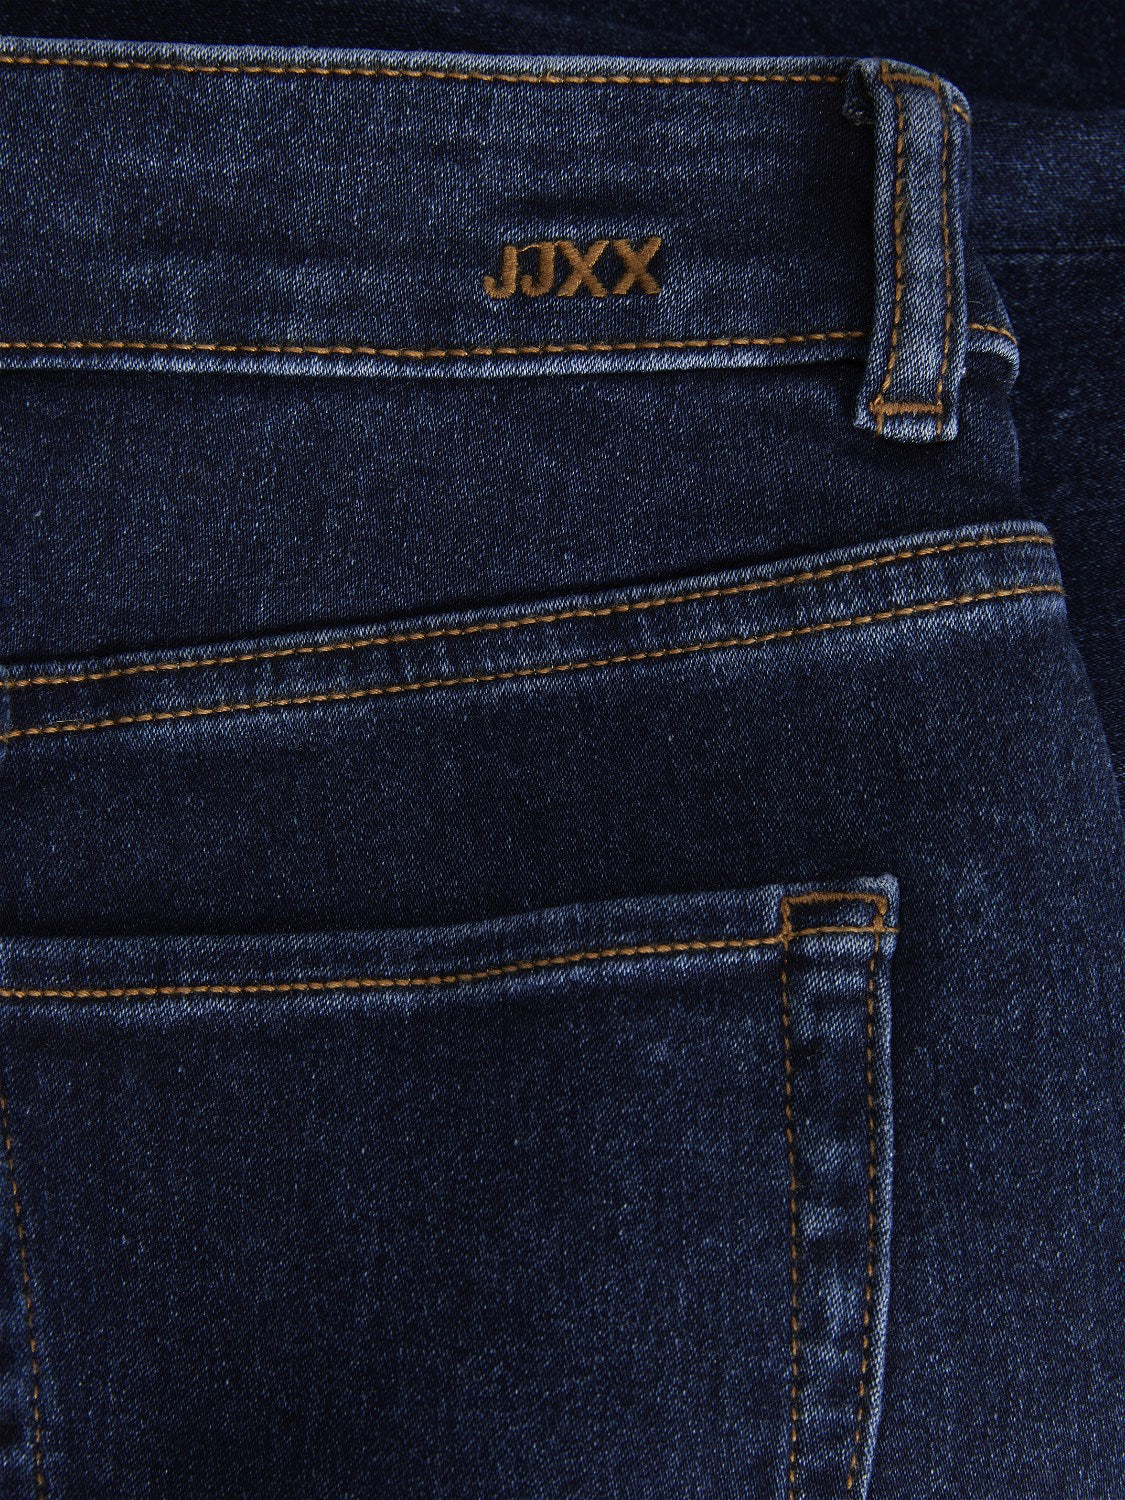 jeans-skinny-femme-vienna-JJXX-12203791-DM2-SHOP-07